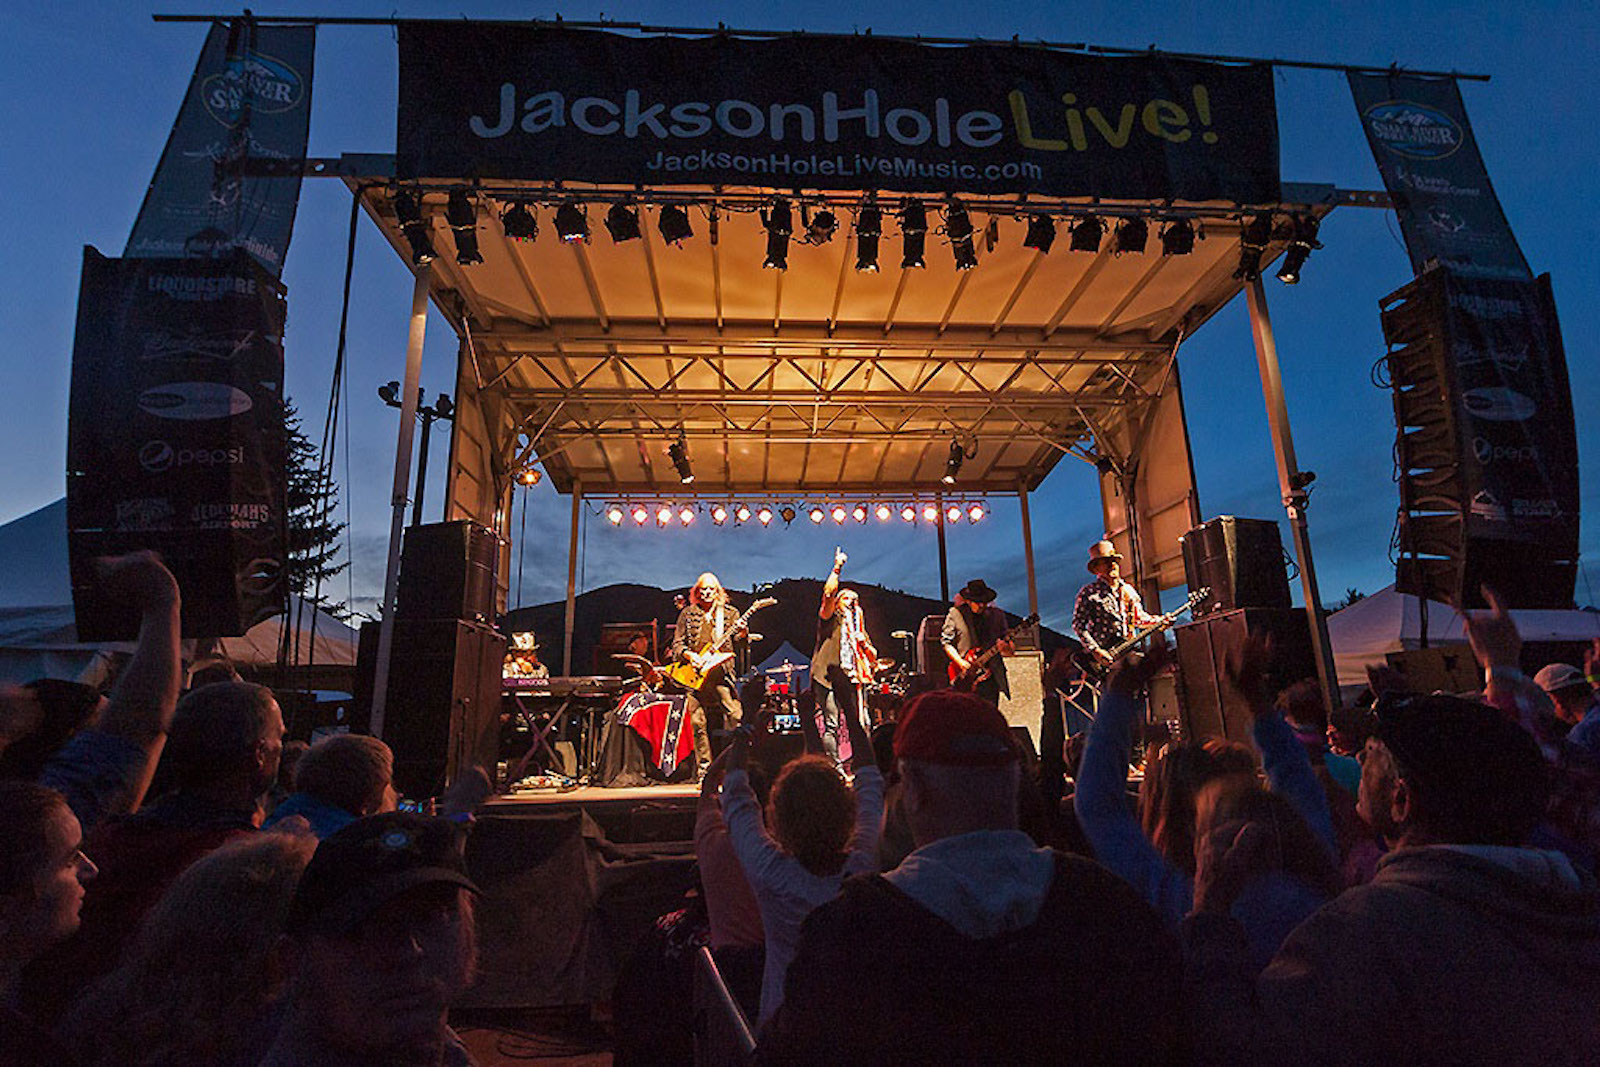 Jackson Hole Live Concert Series bandstand at evening